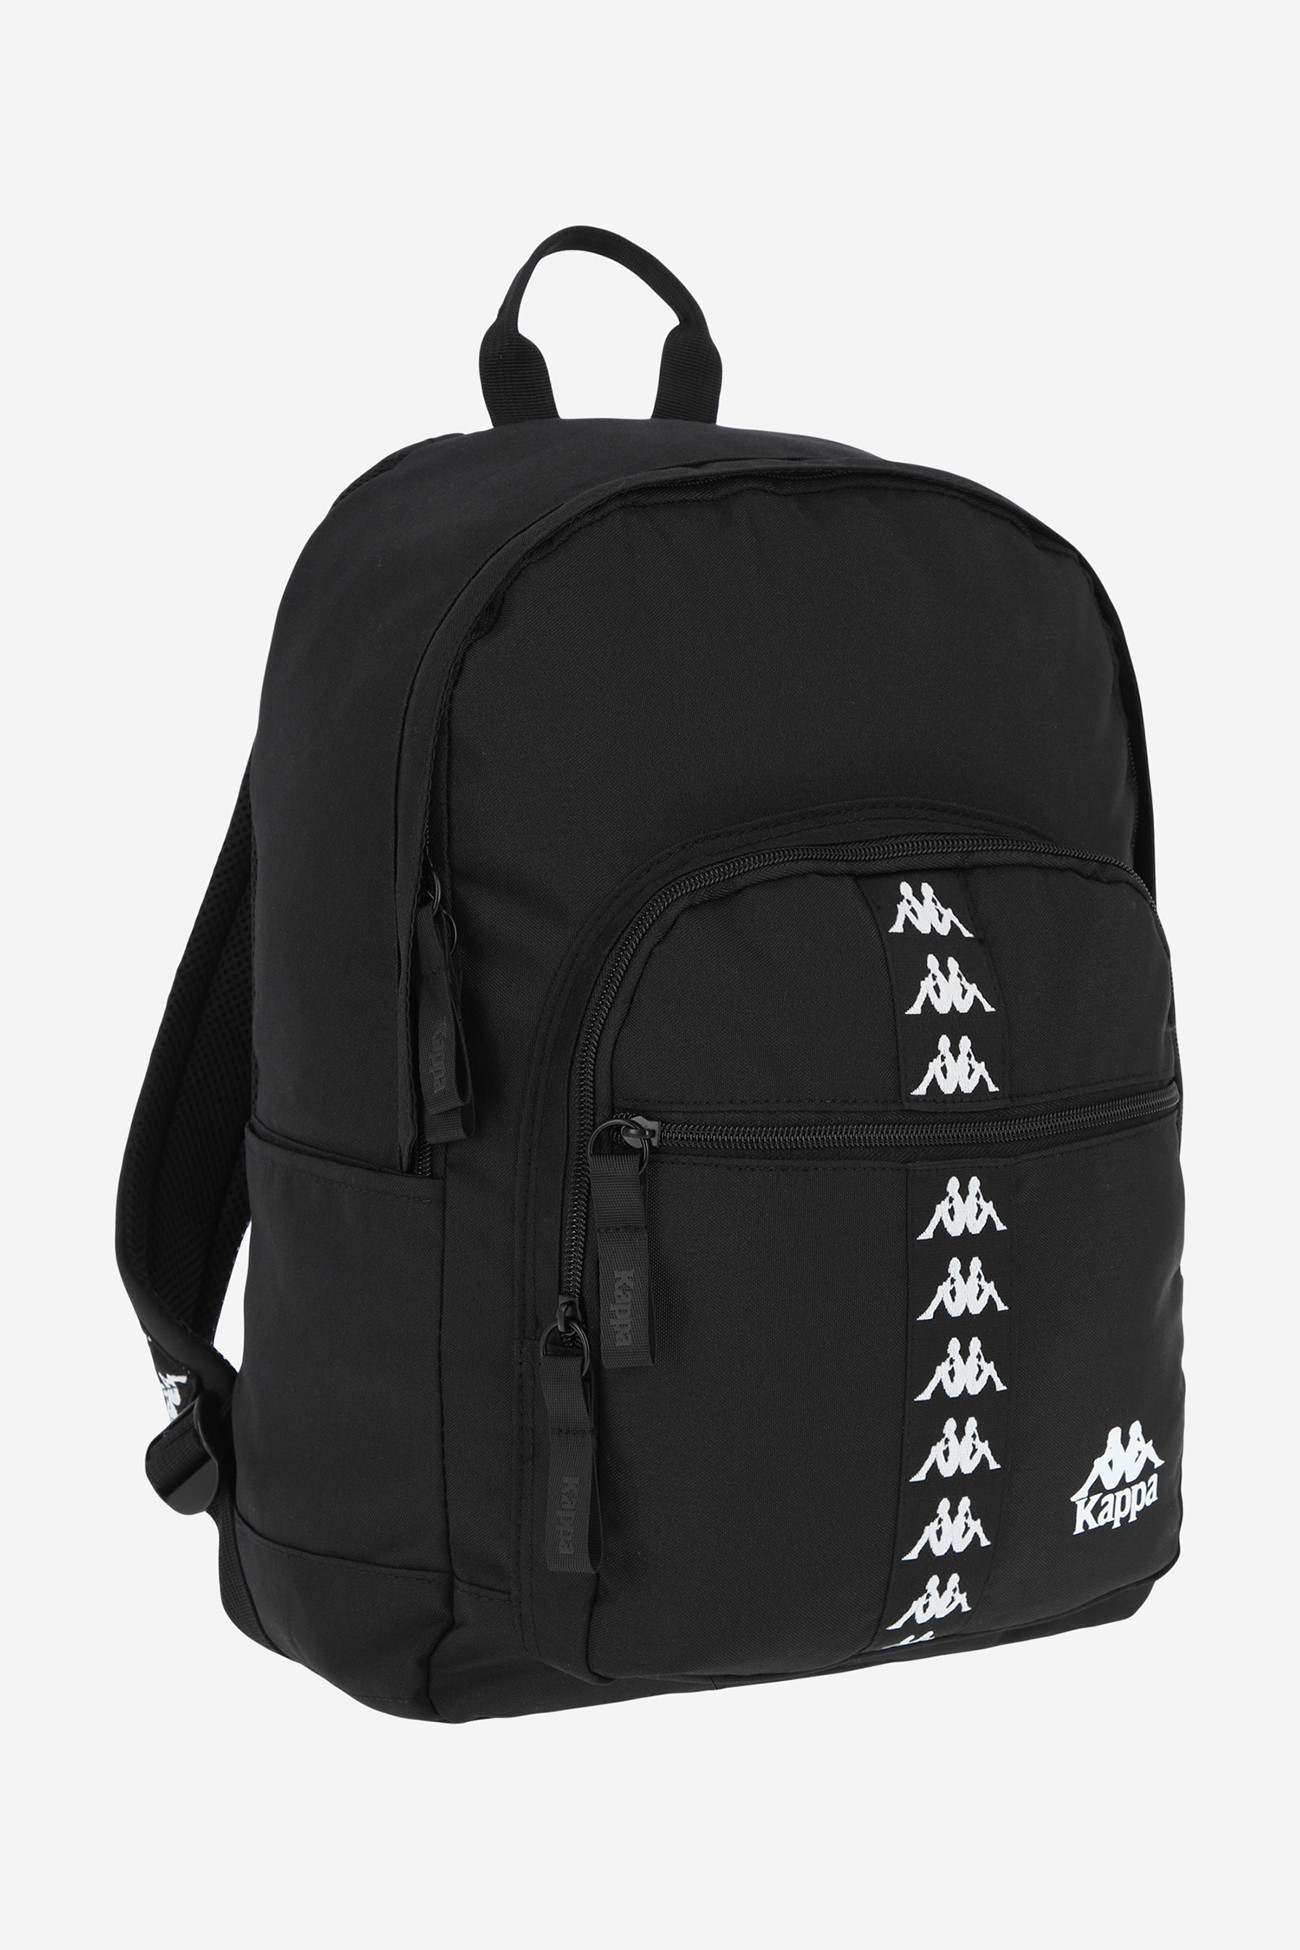 Рюкзак Kappa Backpack черный 113893-99 изображение 3